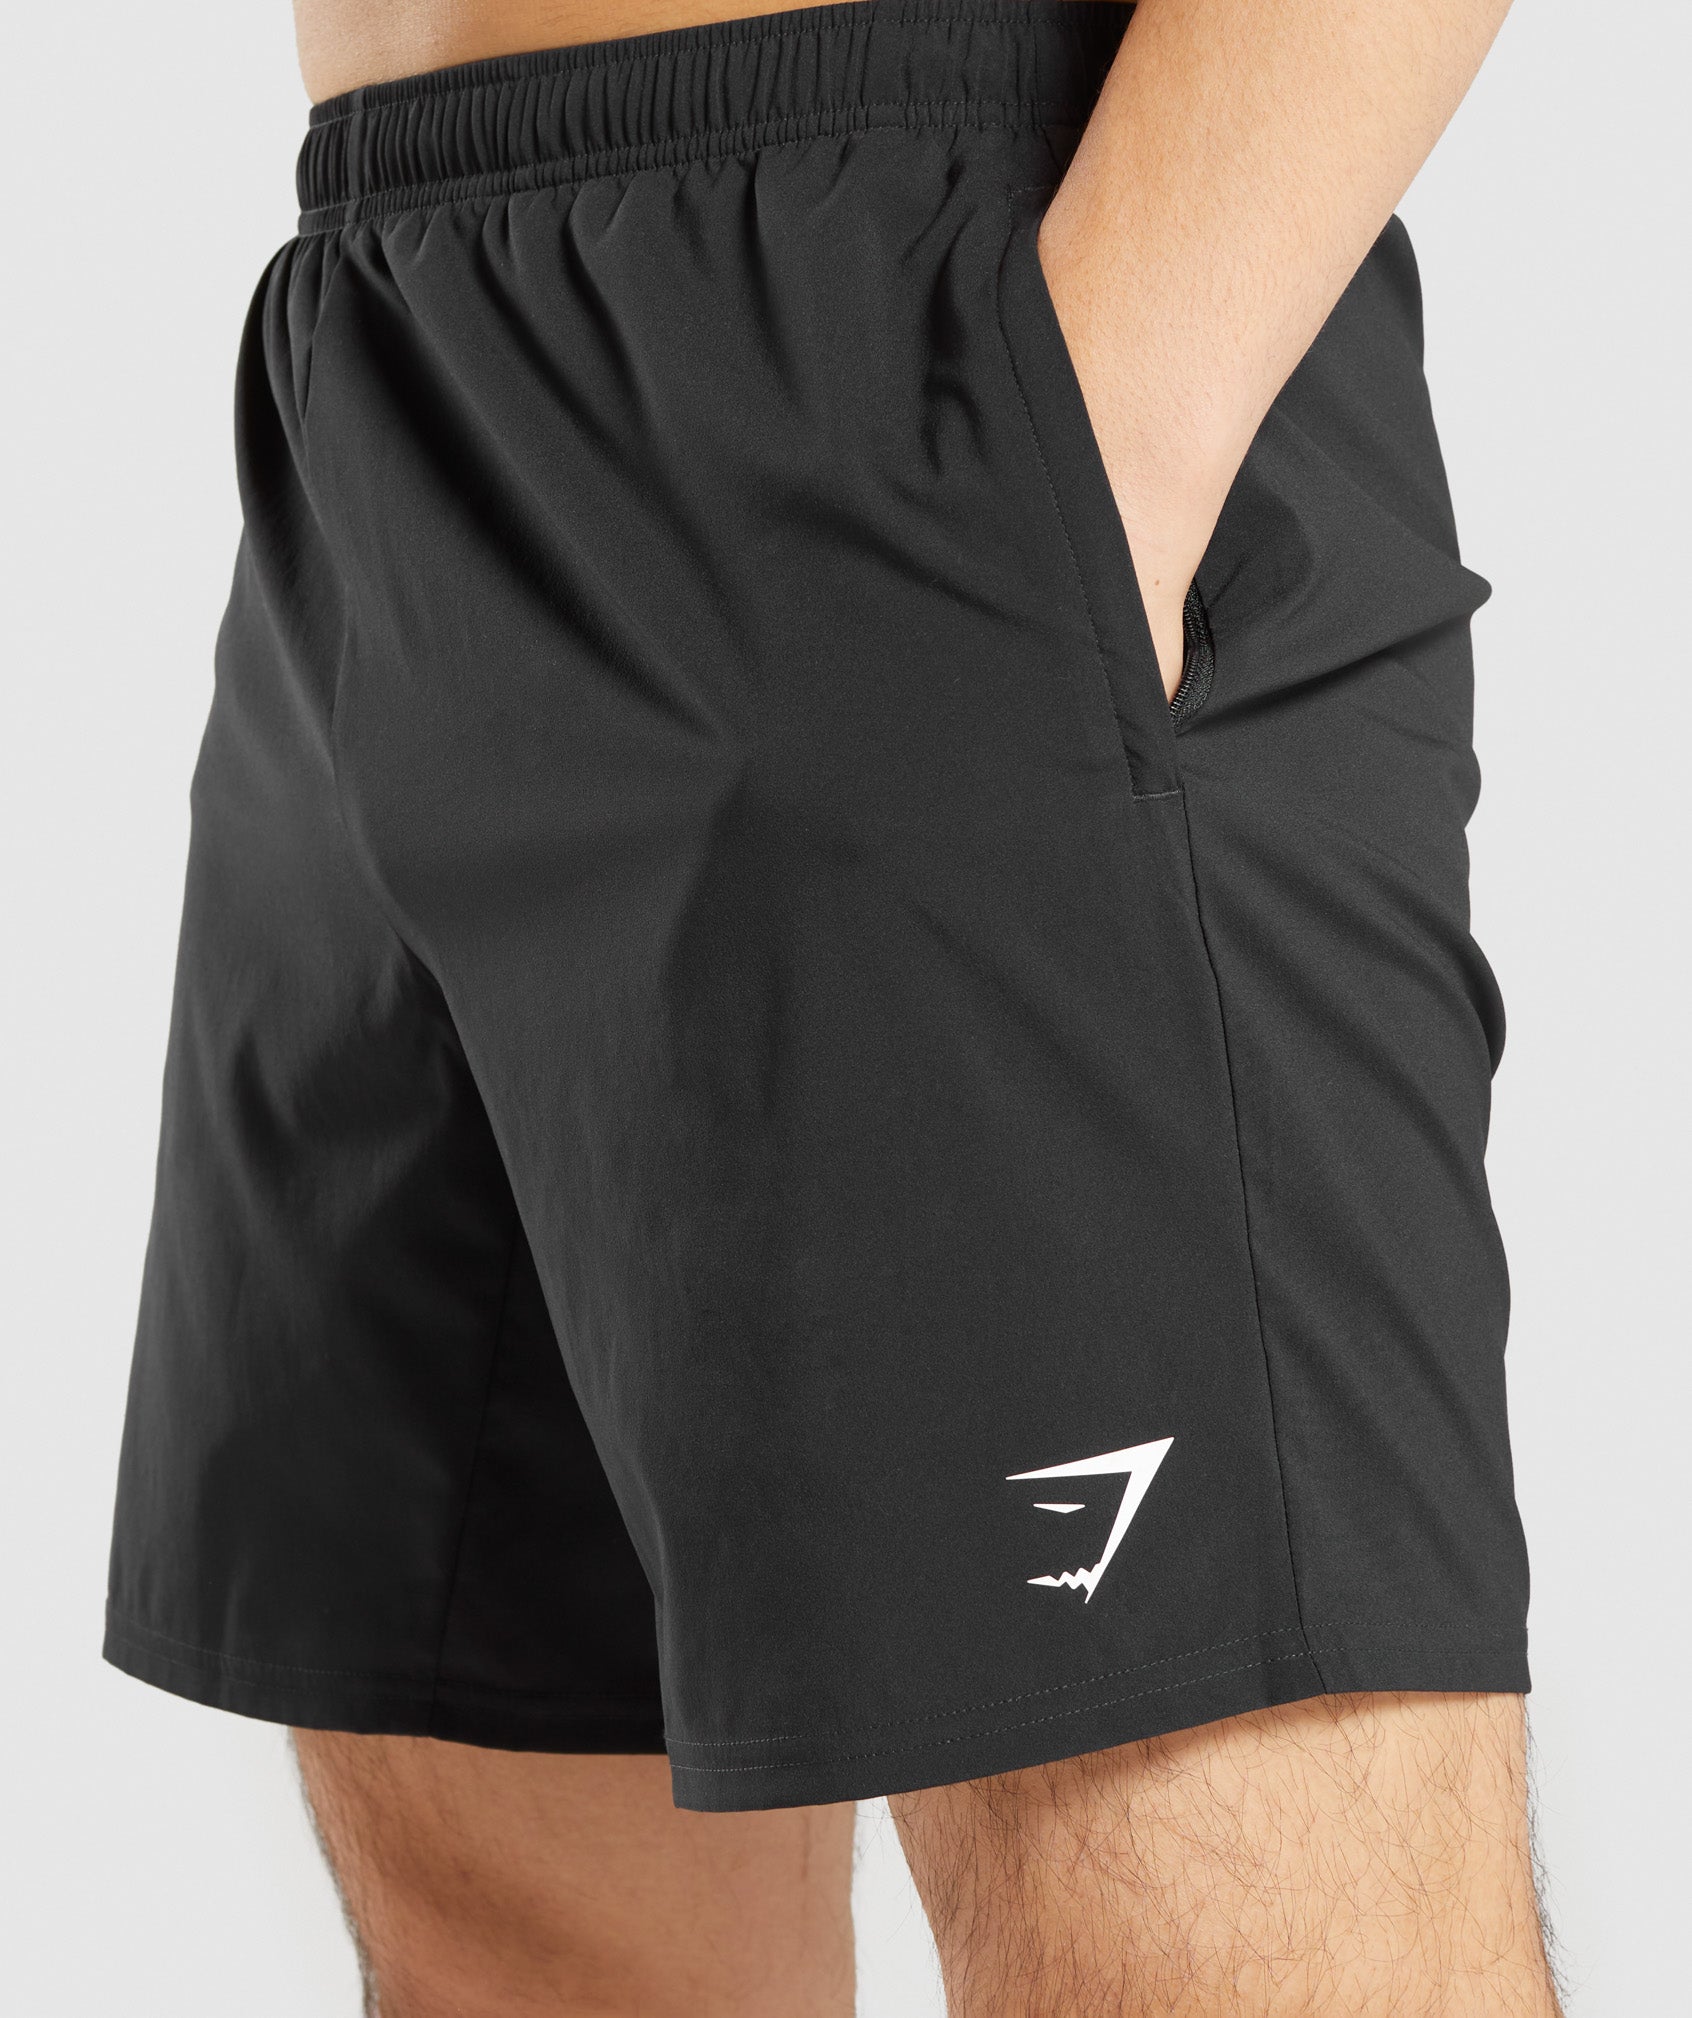 Gymshark Men's Sports Track Jacket Full Zip Black/Blue Zip Pockets Size M